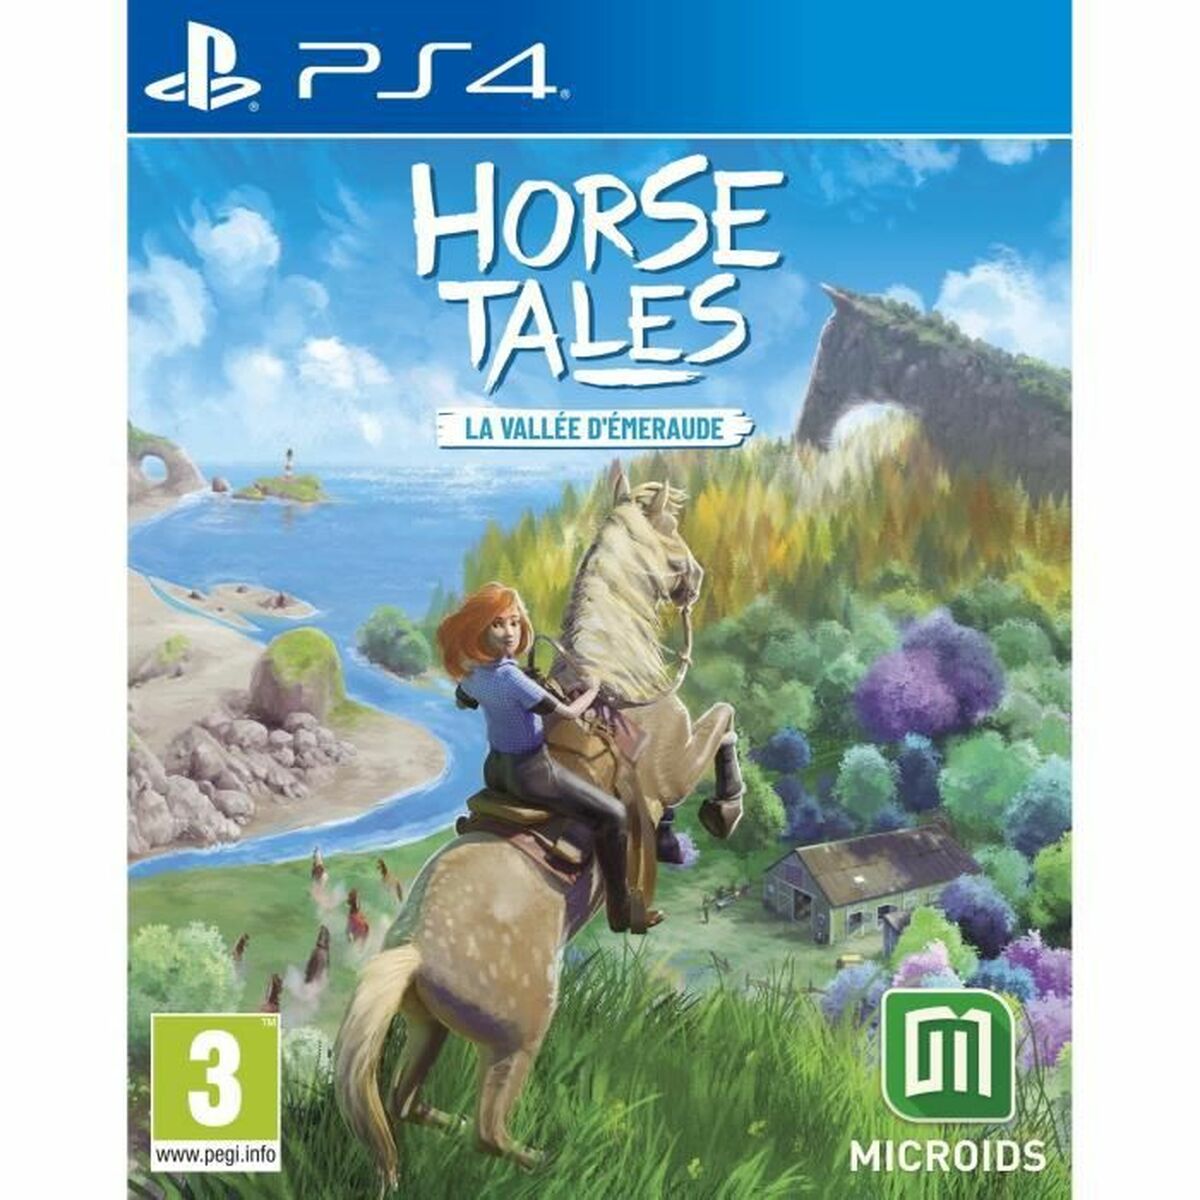 Jeu vidéo PlayStation 4 Microids Horse Tales